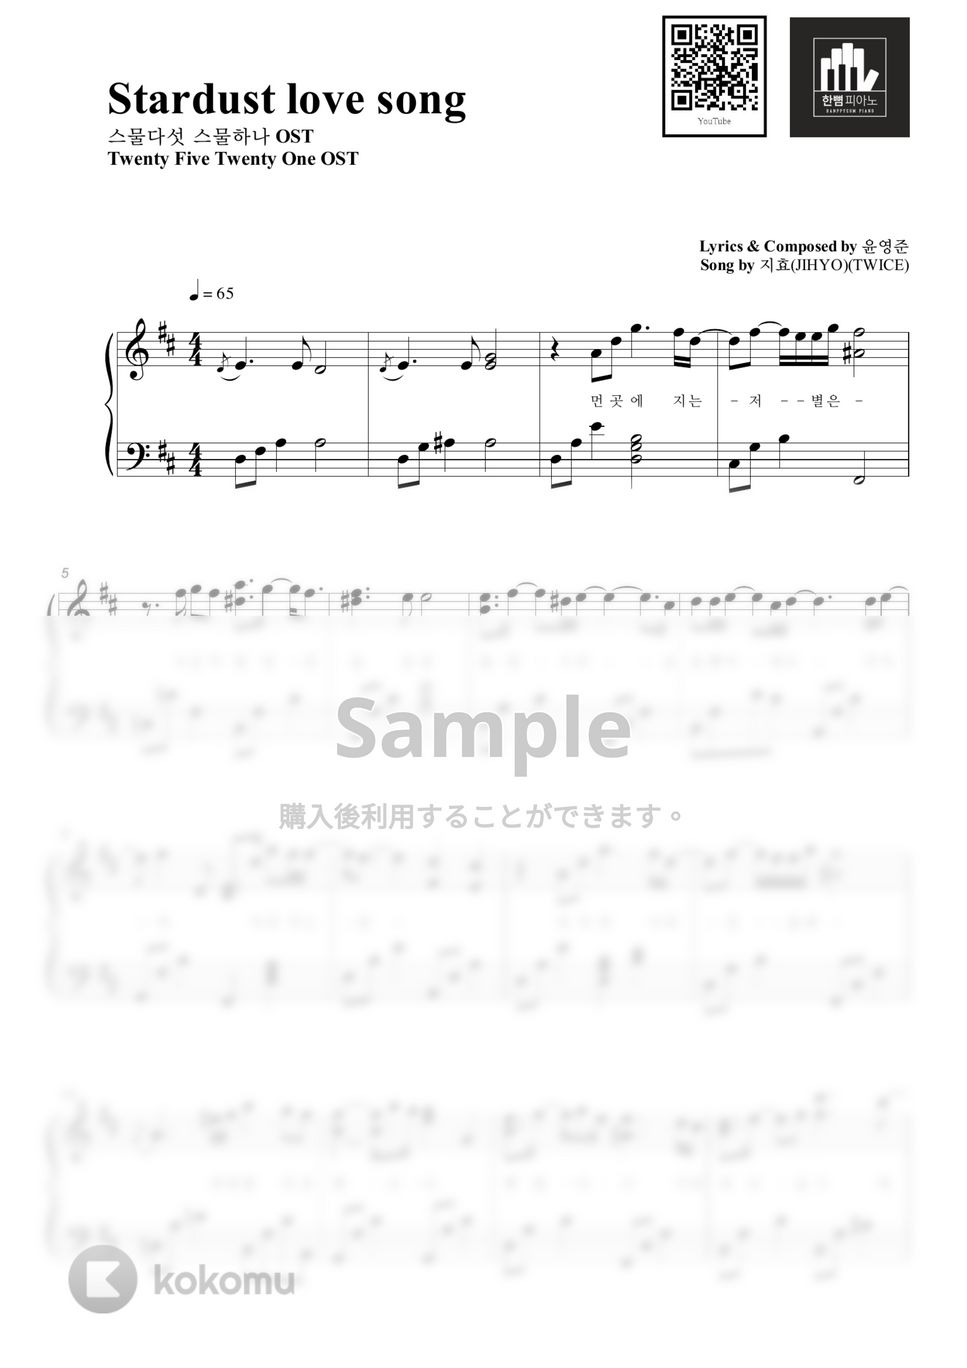 Twenty Five Twenty One - Stardust love song (PIANO COVER) by HANPPYEOMPIANO